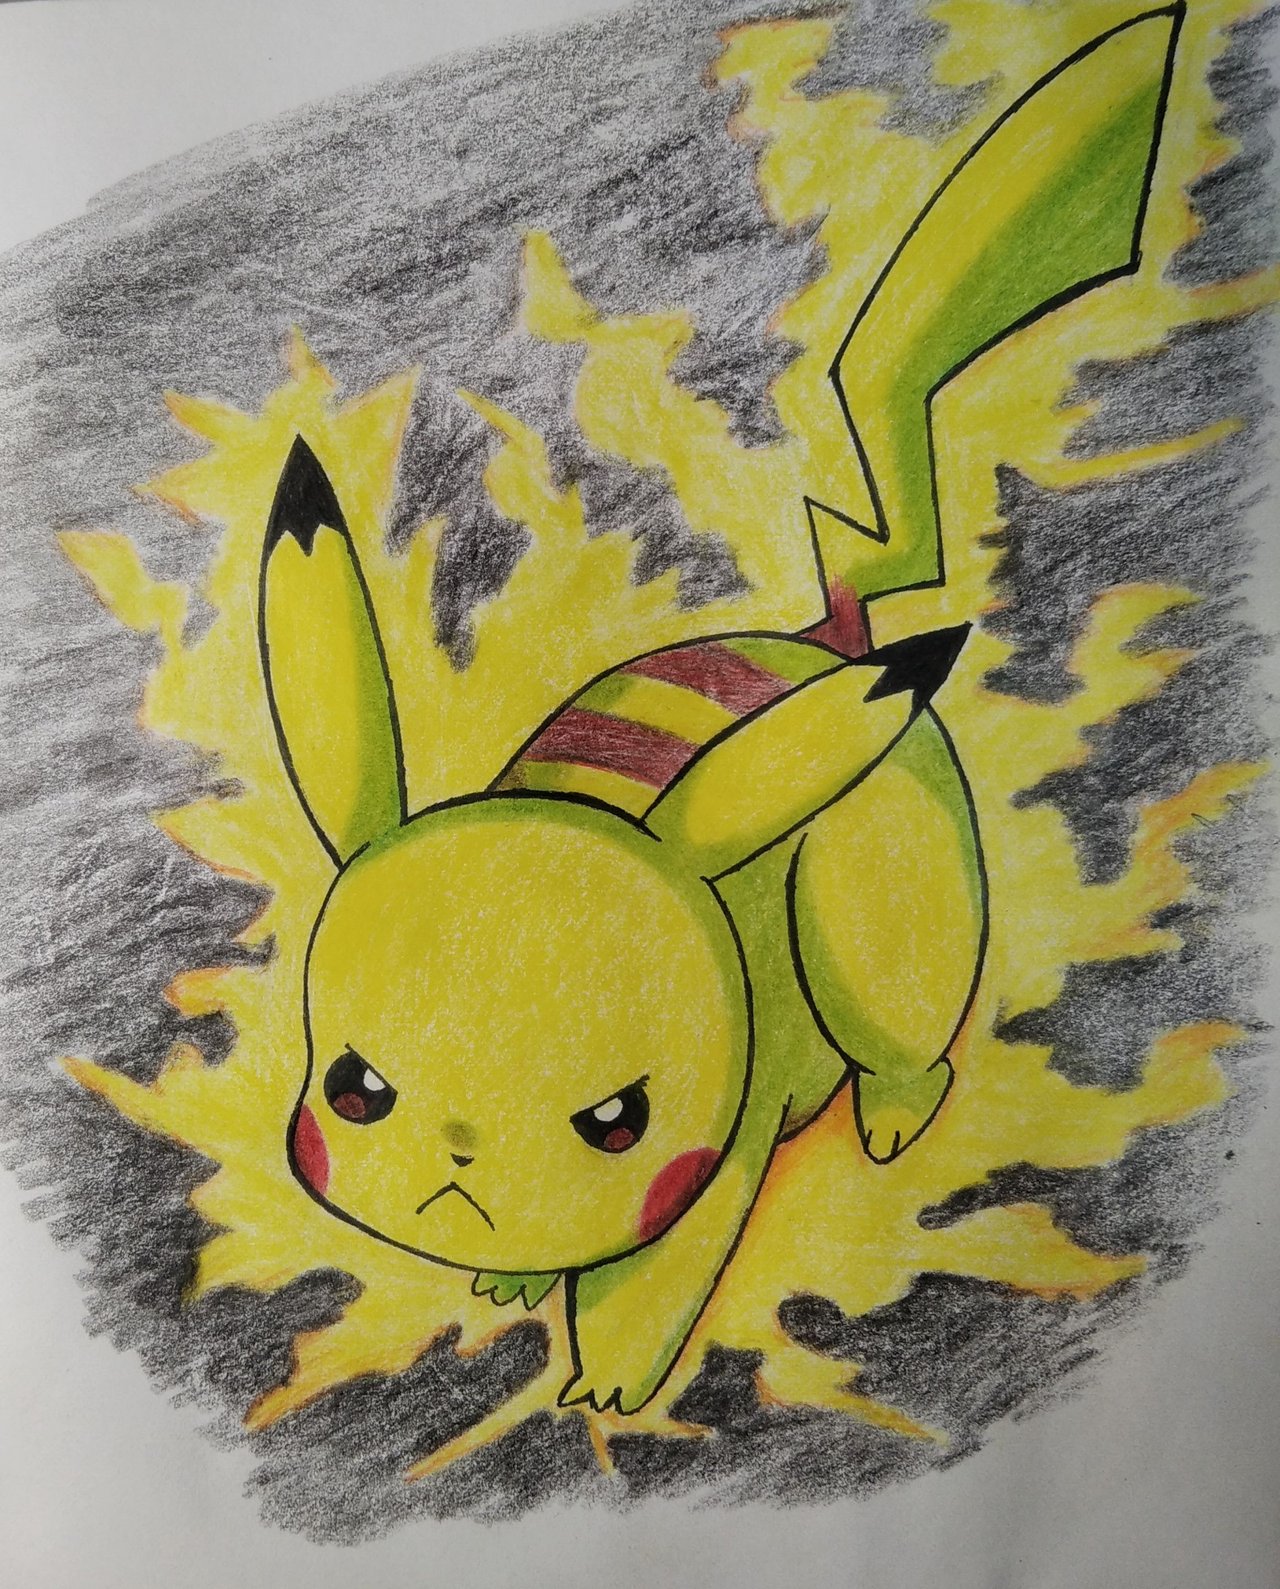 COMO DIBUJAR A PIKACHU - POKEMON GO! / how yo draw pikachu